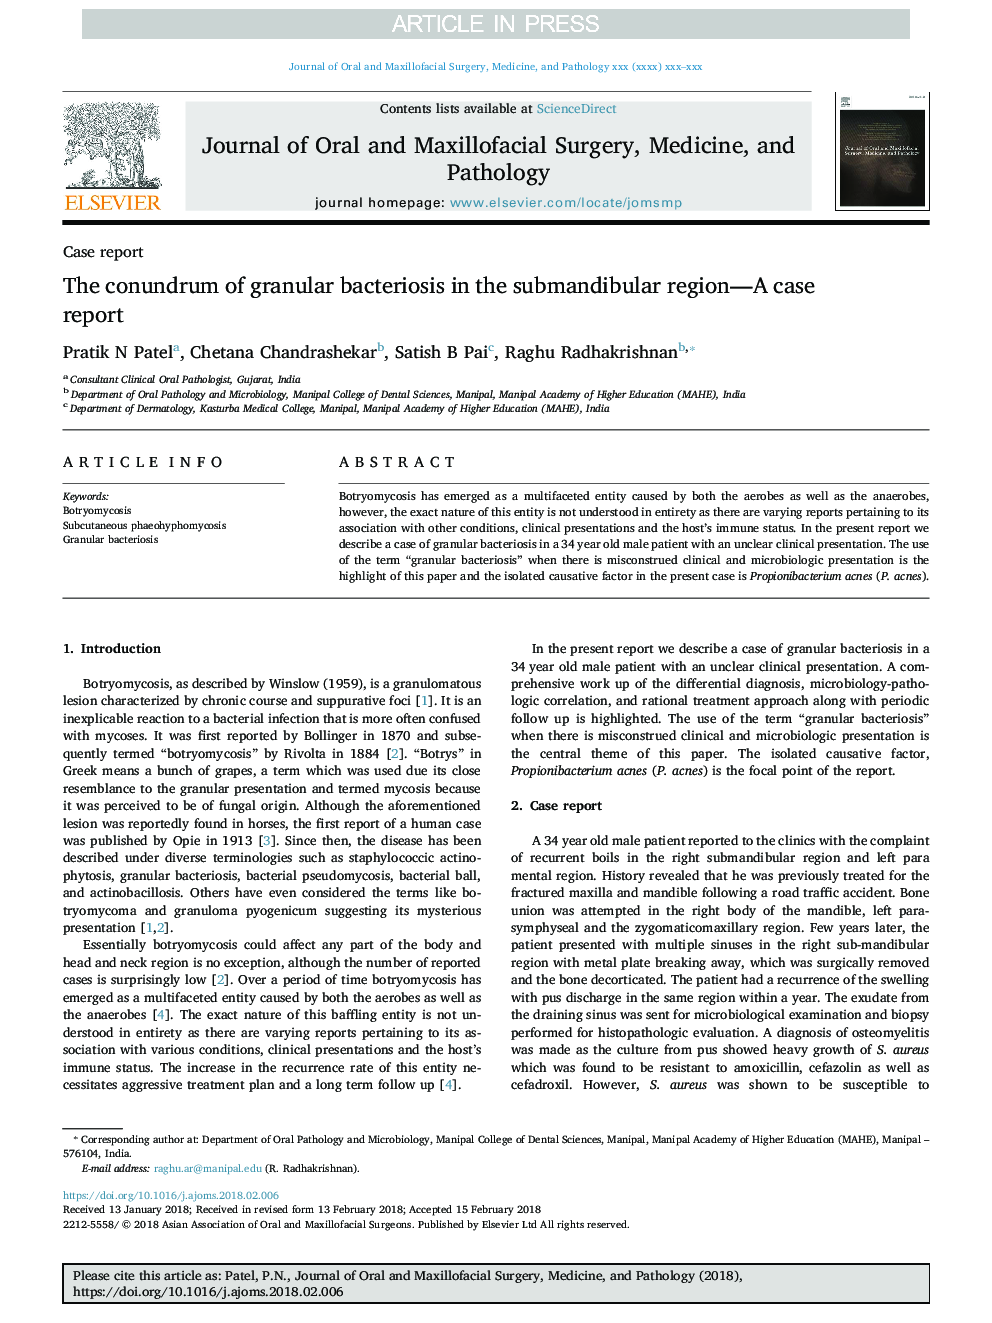 The conundrum of granular bacteriosis in the submandibular region-A case report